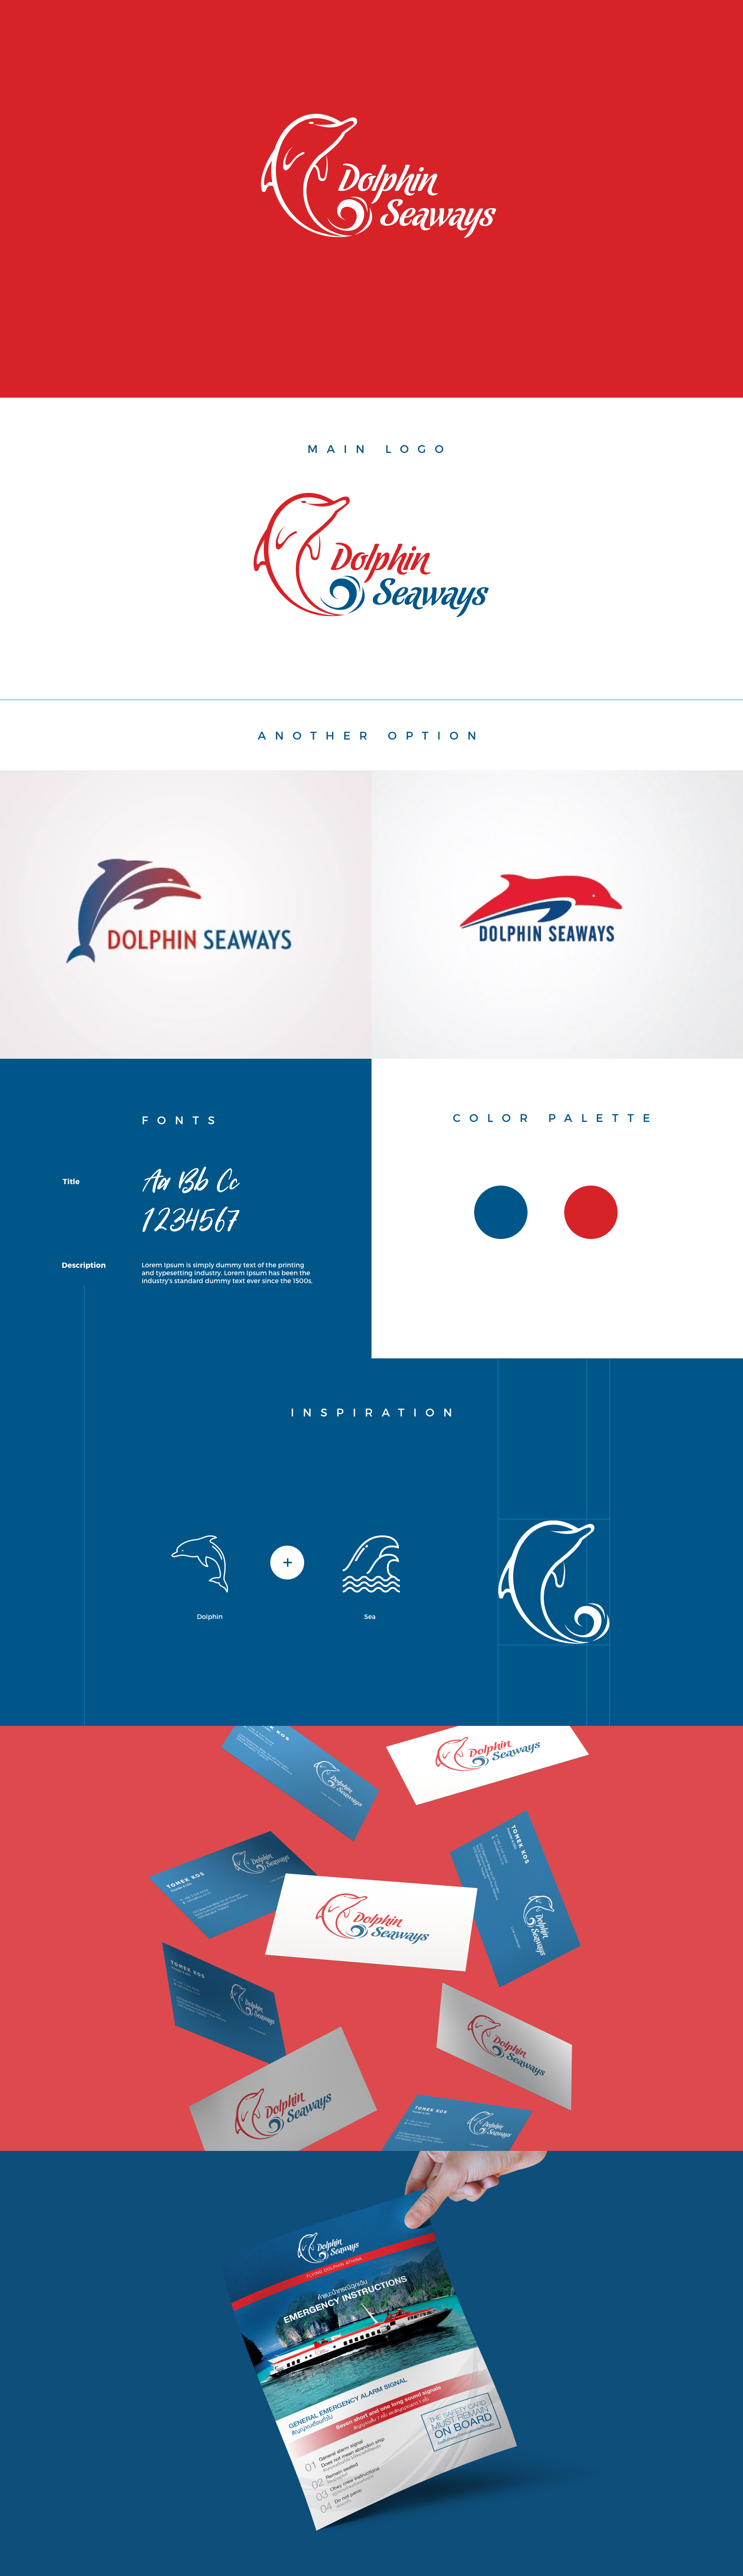 KOS Design - Dolphin Seaways